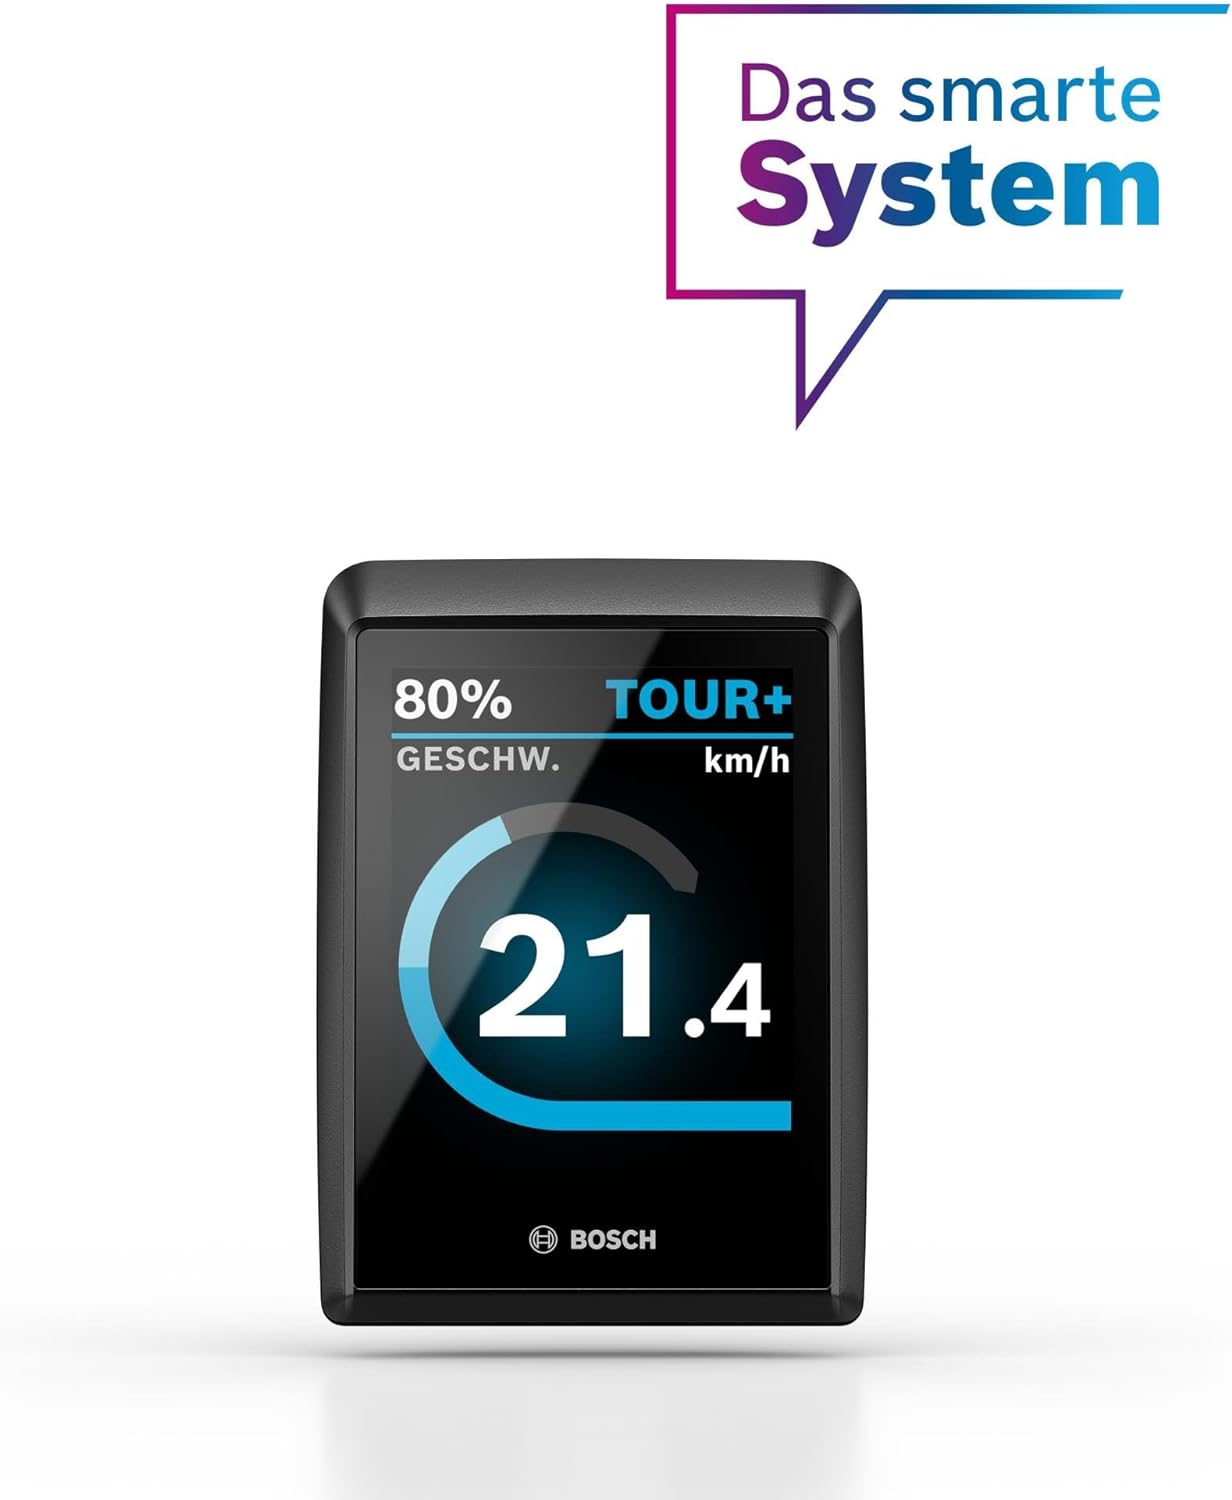 Bosch E-bike Display Kiox 500 (BHU3700) - smart System